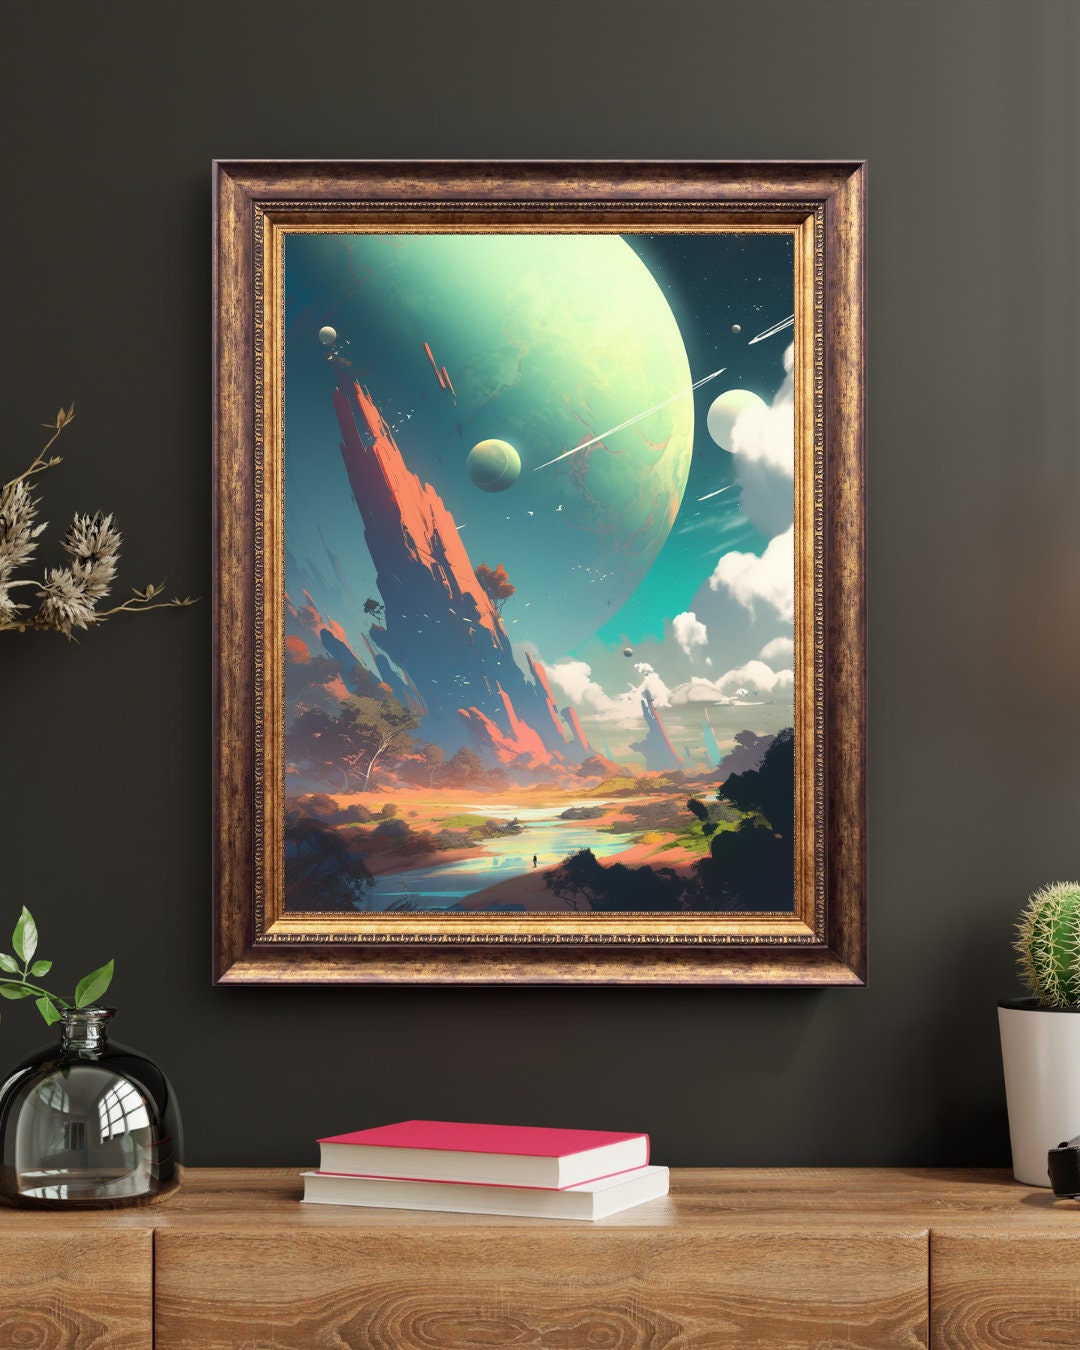 Majestic Alien Vista - Original Poster - Artwork - Illustration Print Wall Art - Home Decor